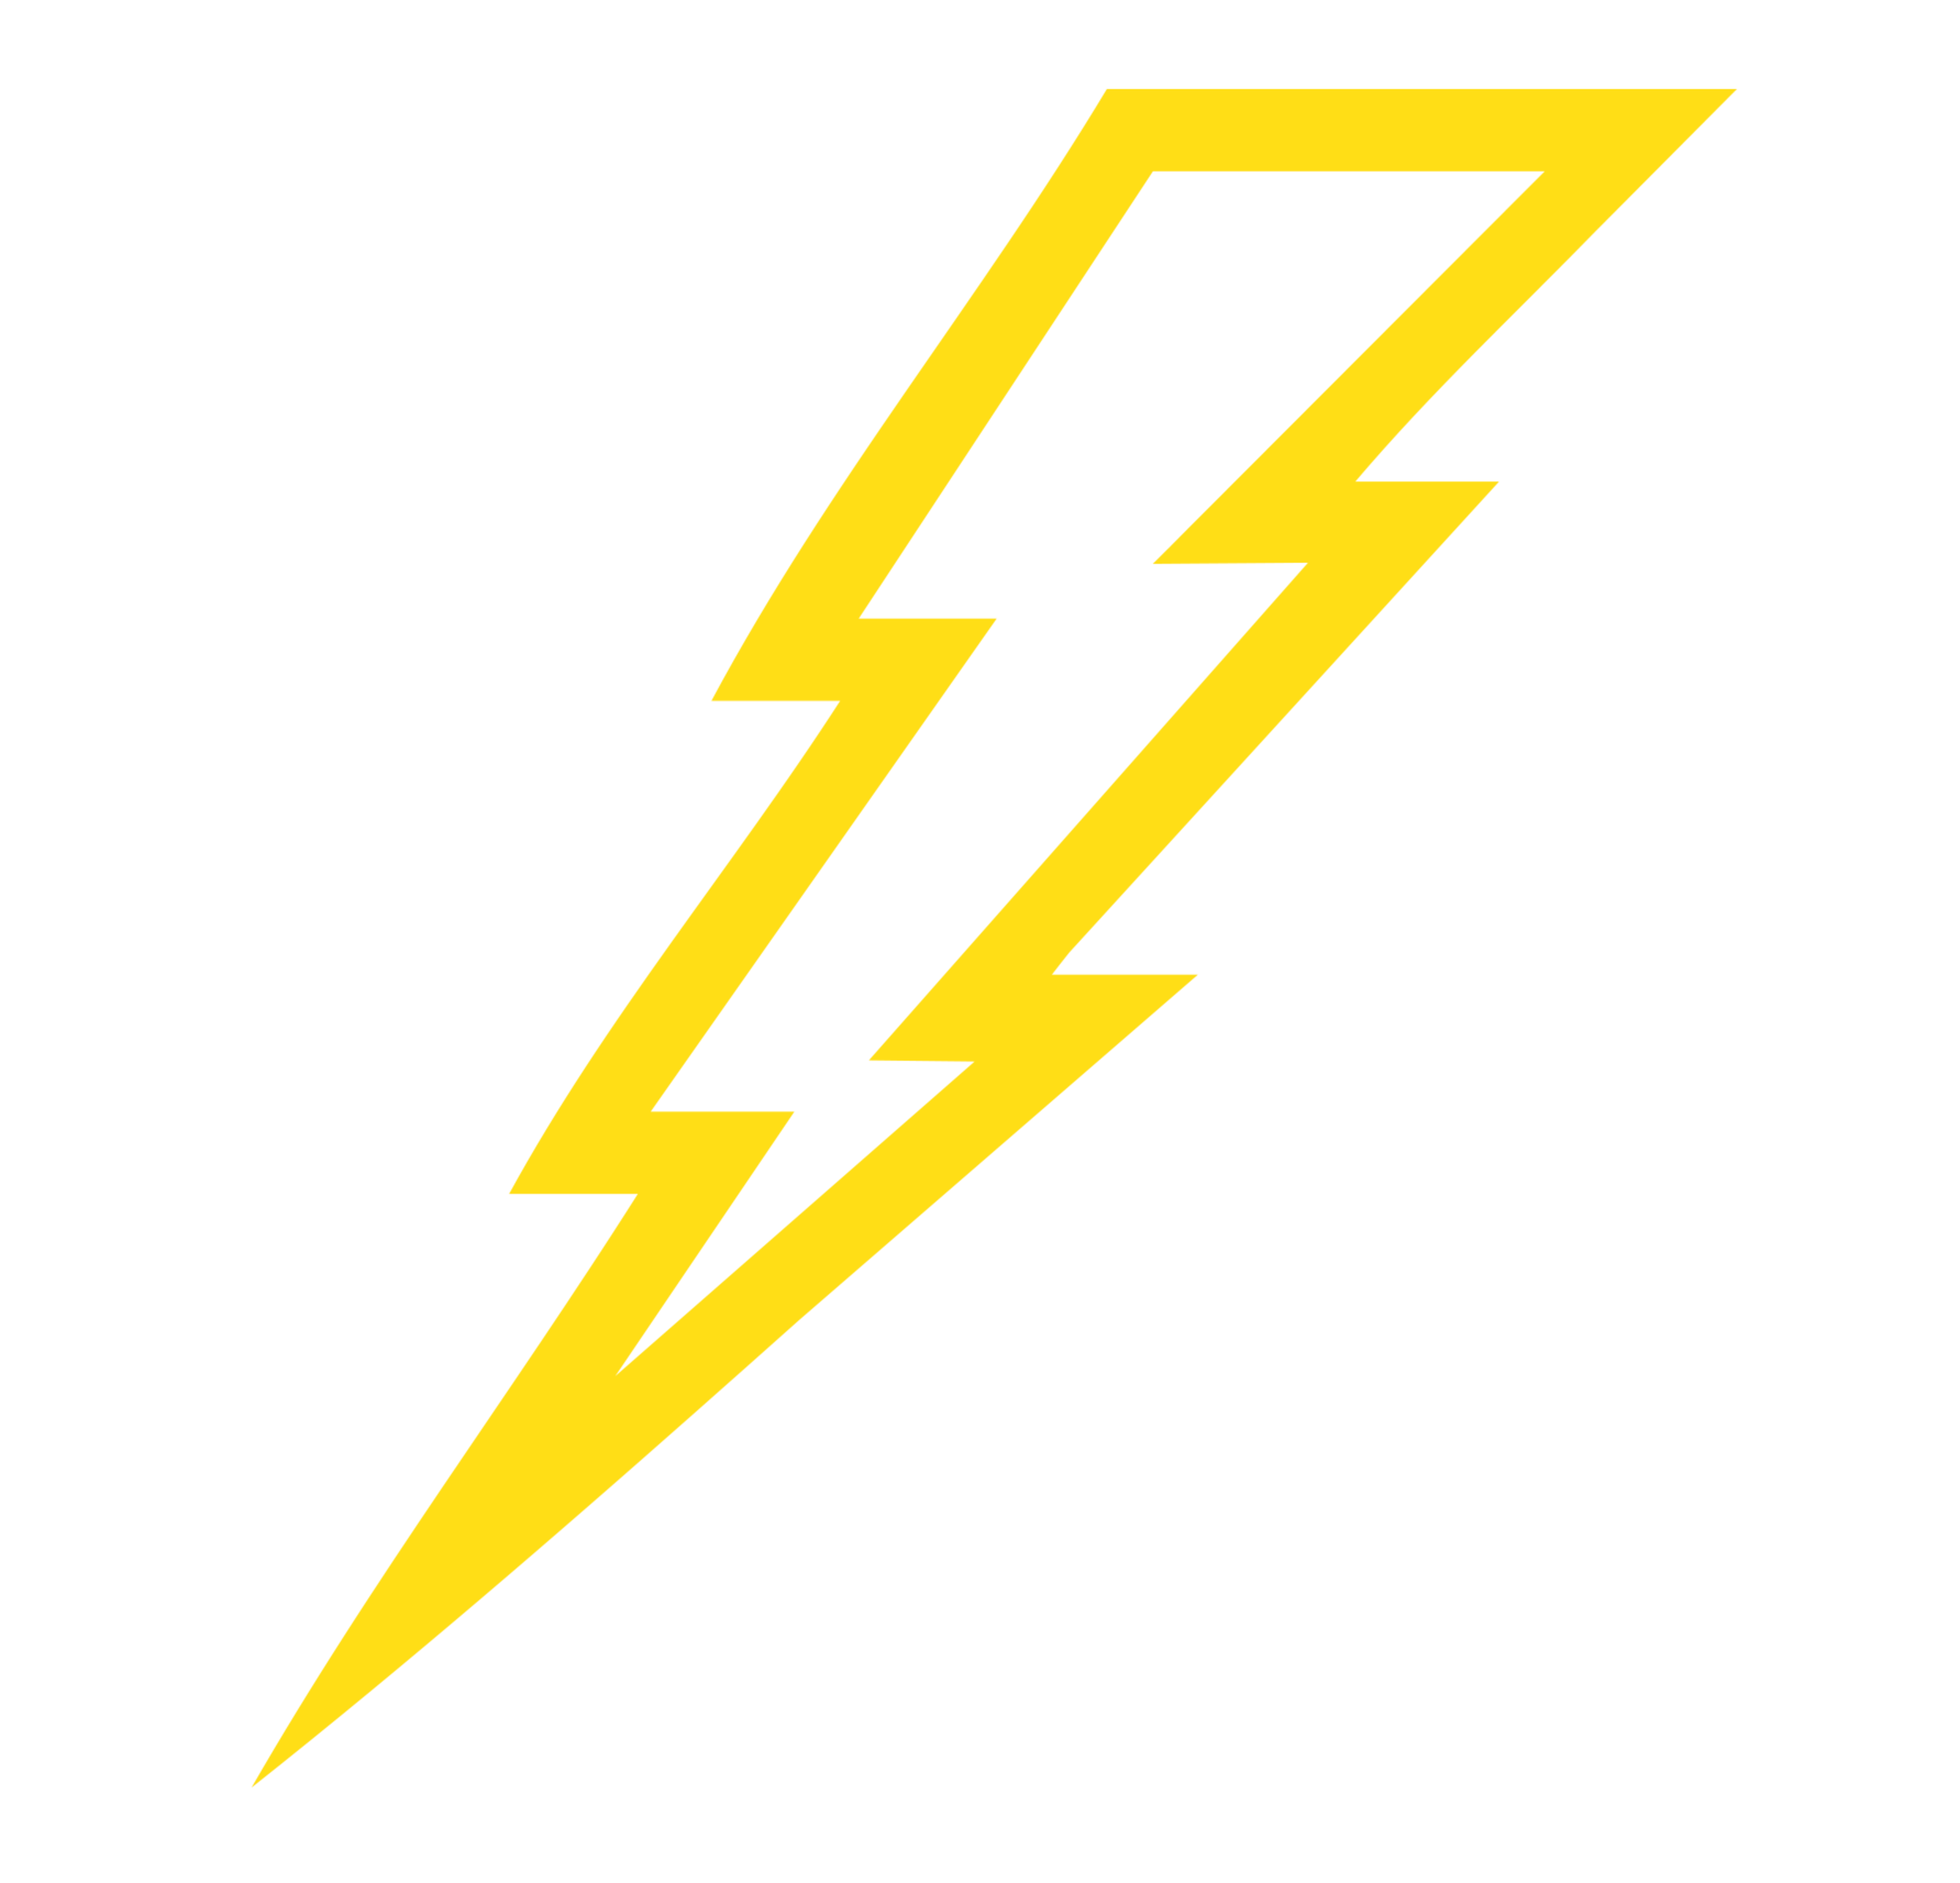 Lightning Bolt Logo Name. the kiss logo history amp trivia the ...